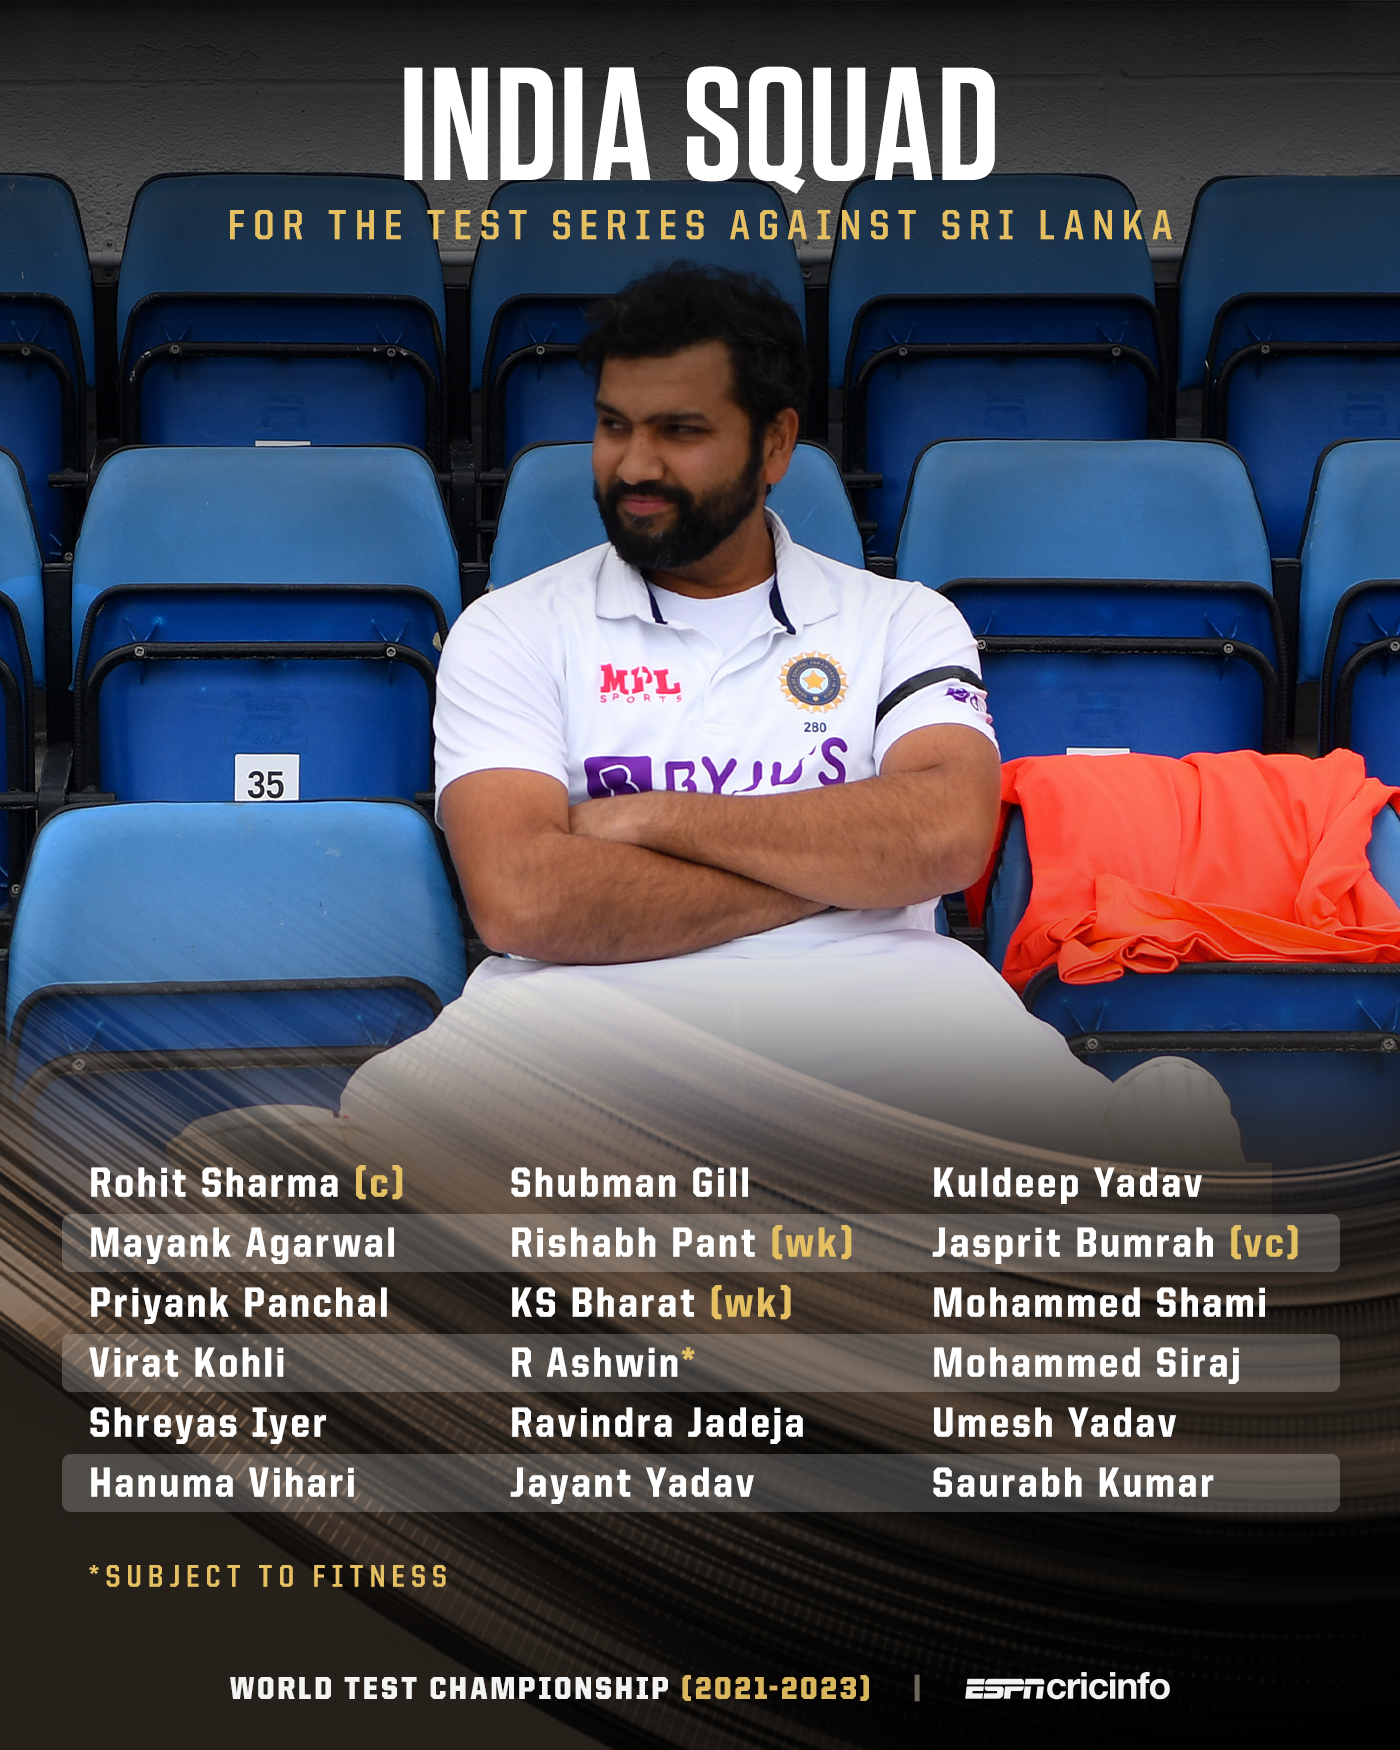 Cheteshwar Pujara, Ajinkya Rahane, Ishant Sharma, Wriddhiman Saha dropped from India Test squad for Sri Lanka series ESPNcricinfo